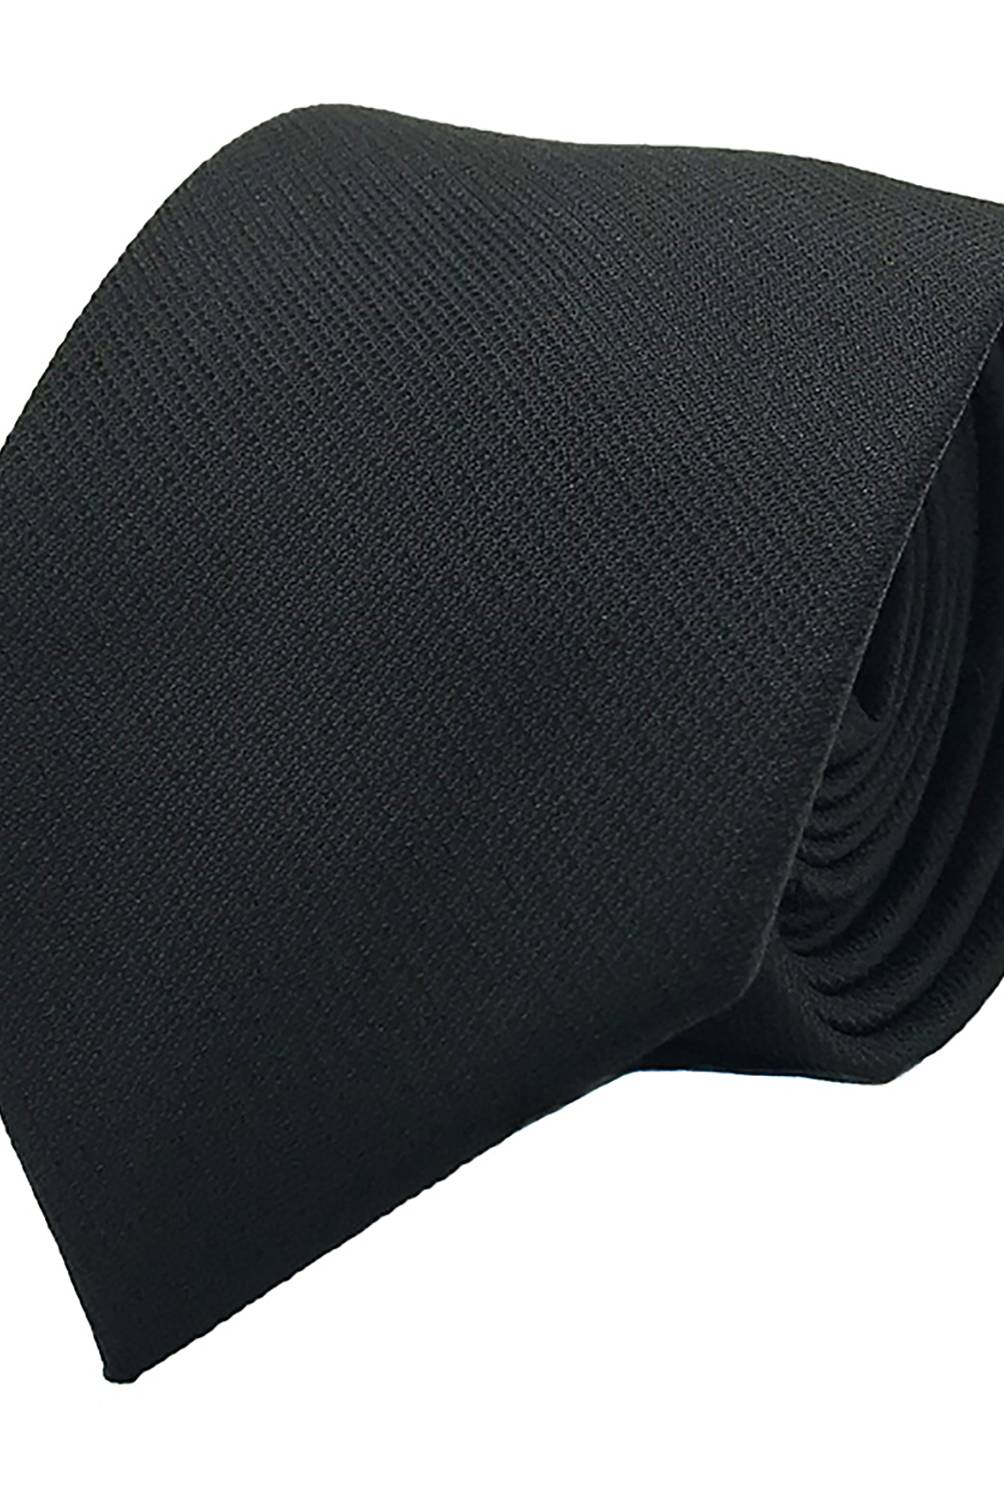 BASEMENT - Corbata Lisa Negra Microfibra 7 Cm